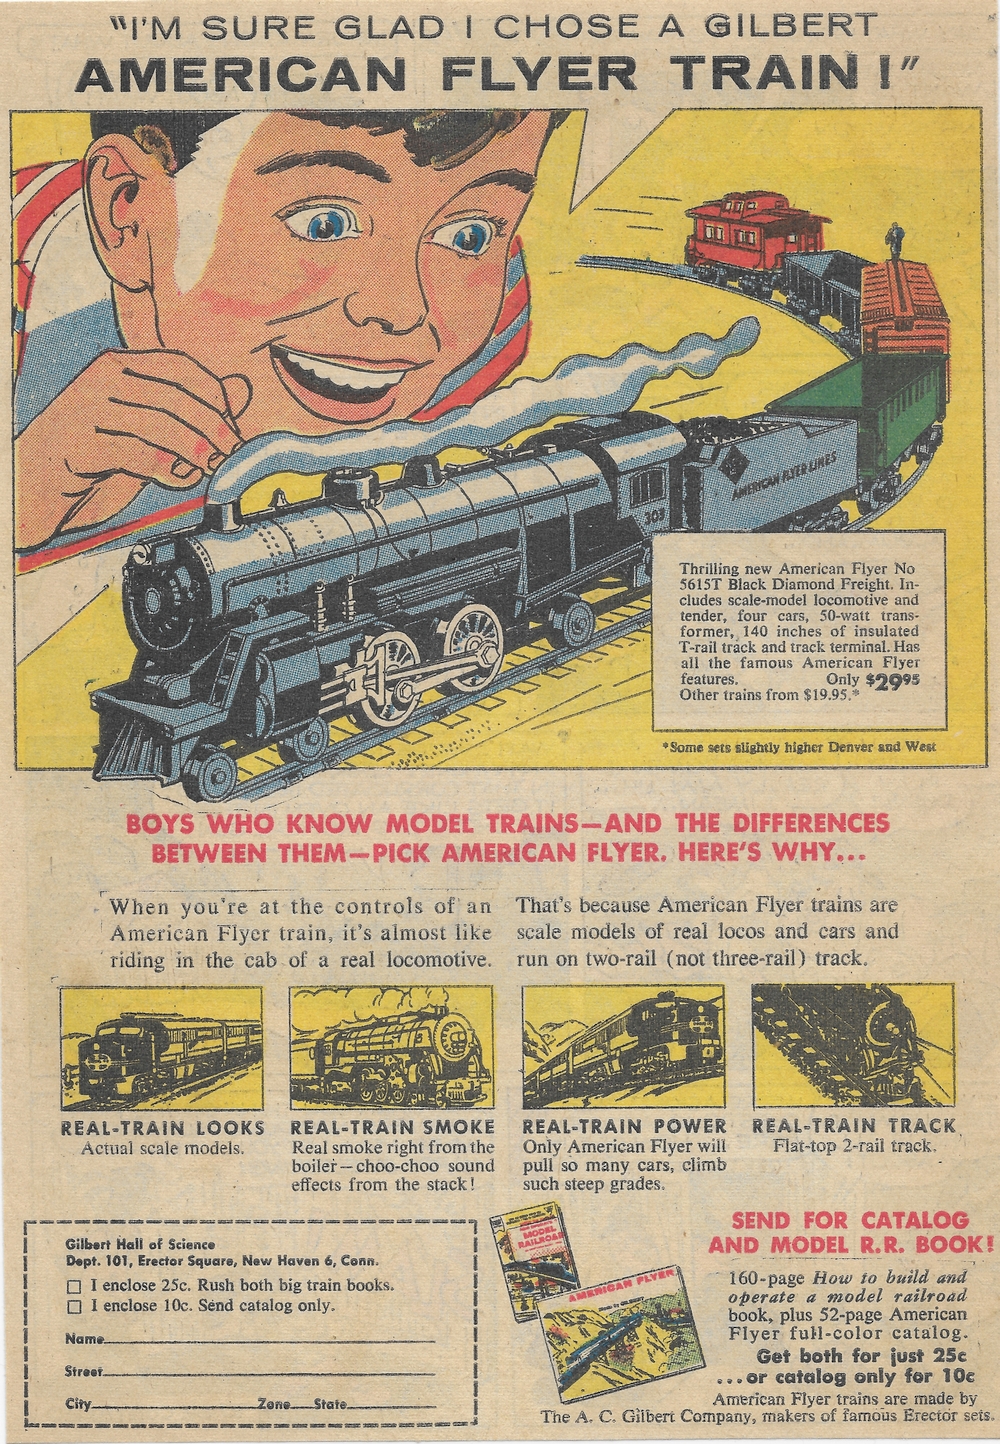 1956 Newspaper Ad